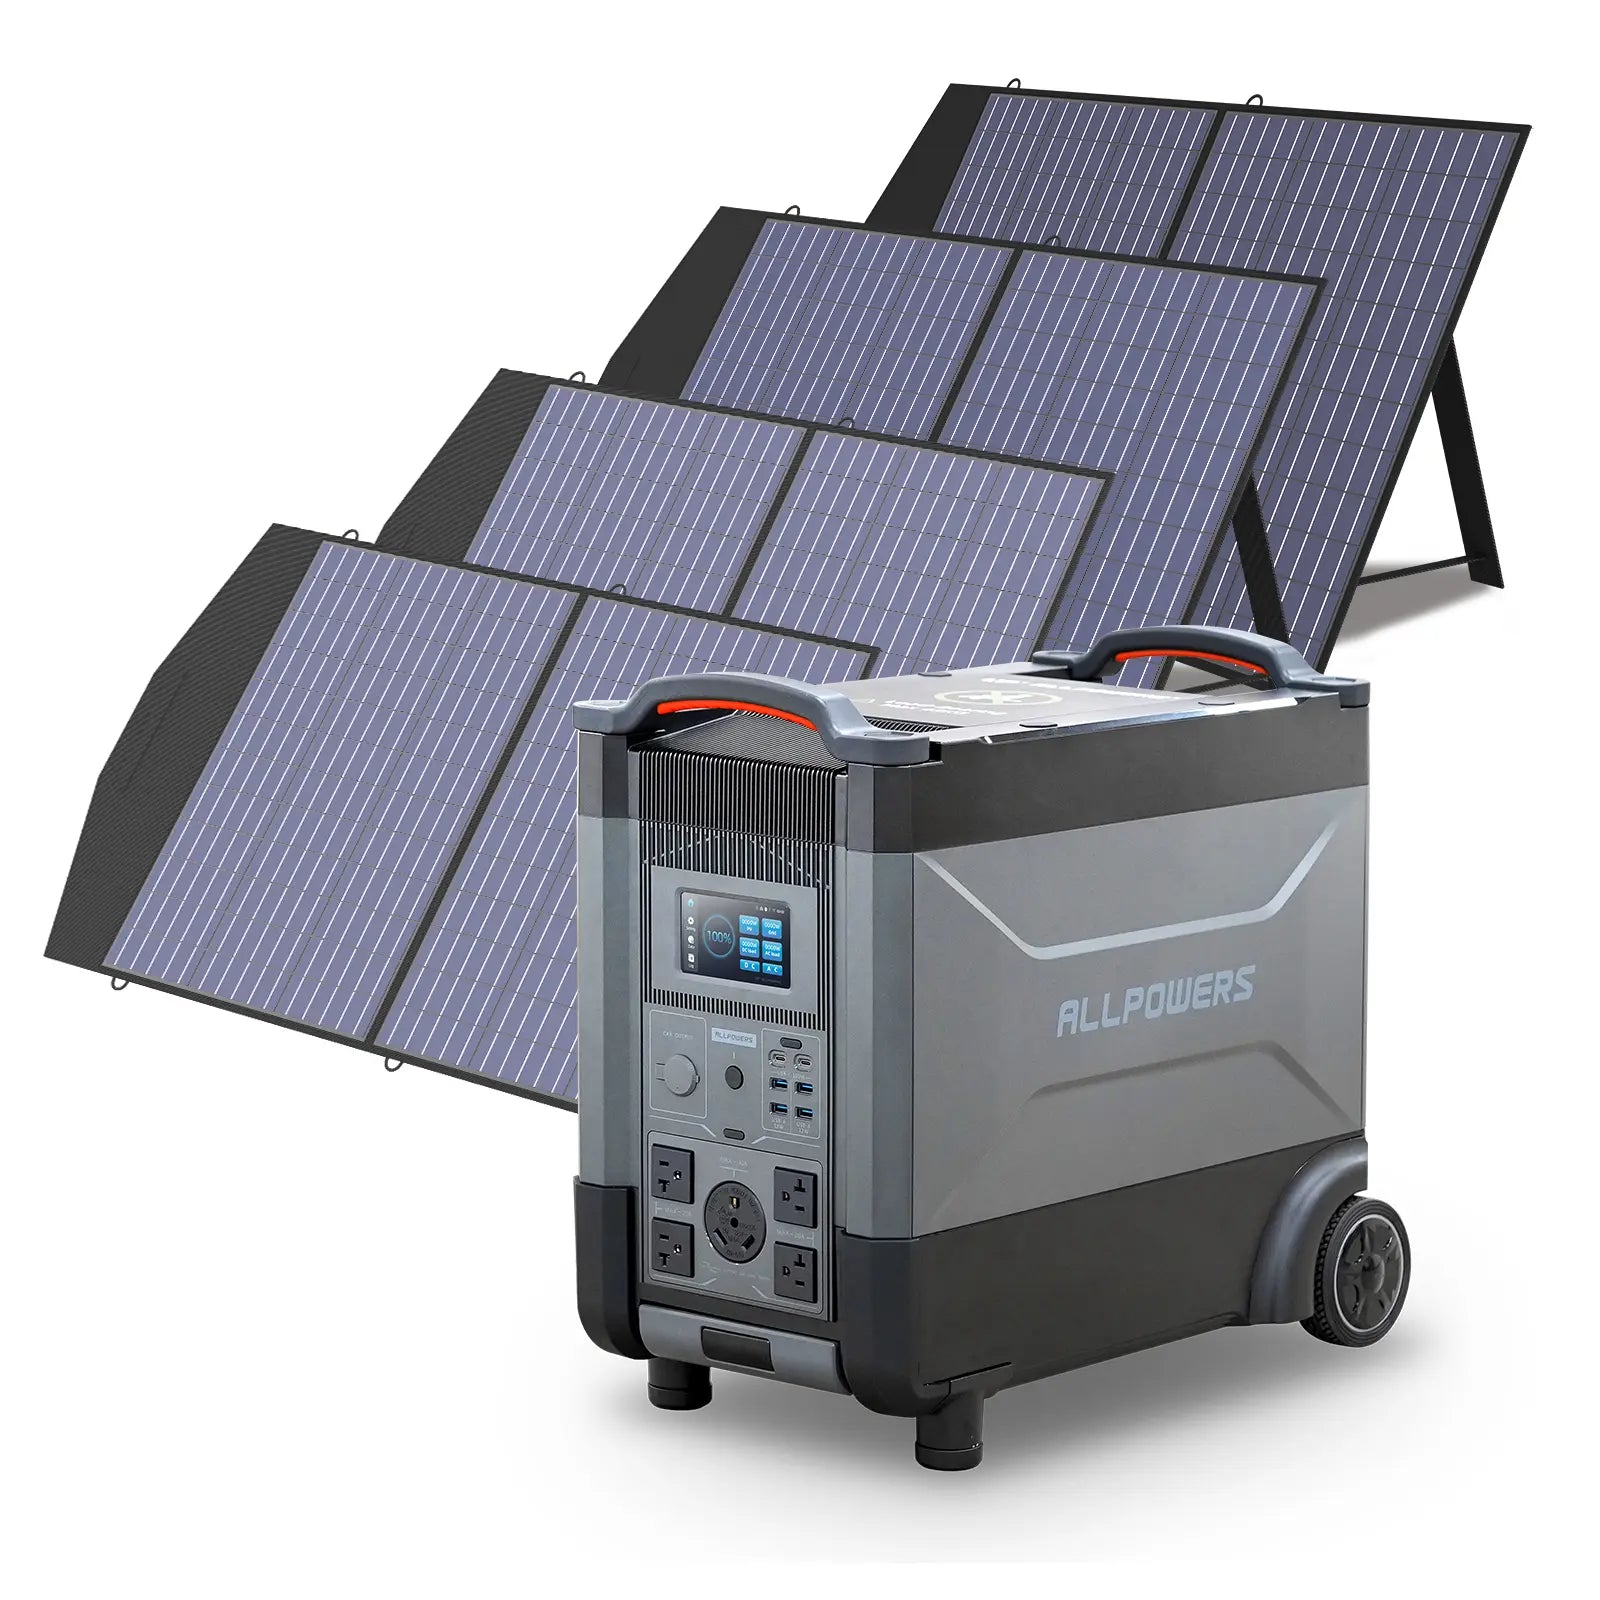 ALLPOWERS Solar Generator Kit 4000W (R4000 + SP027 100W Solar Panel)